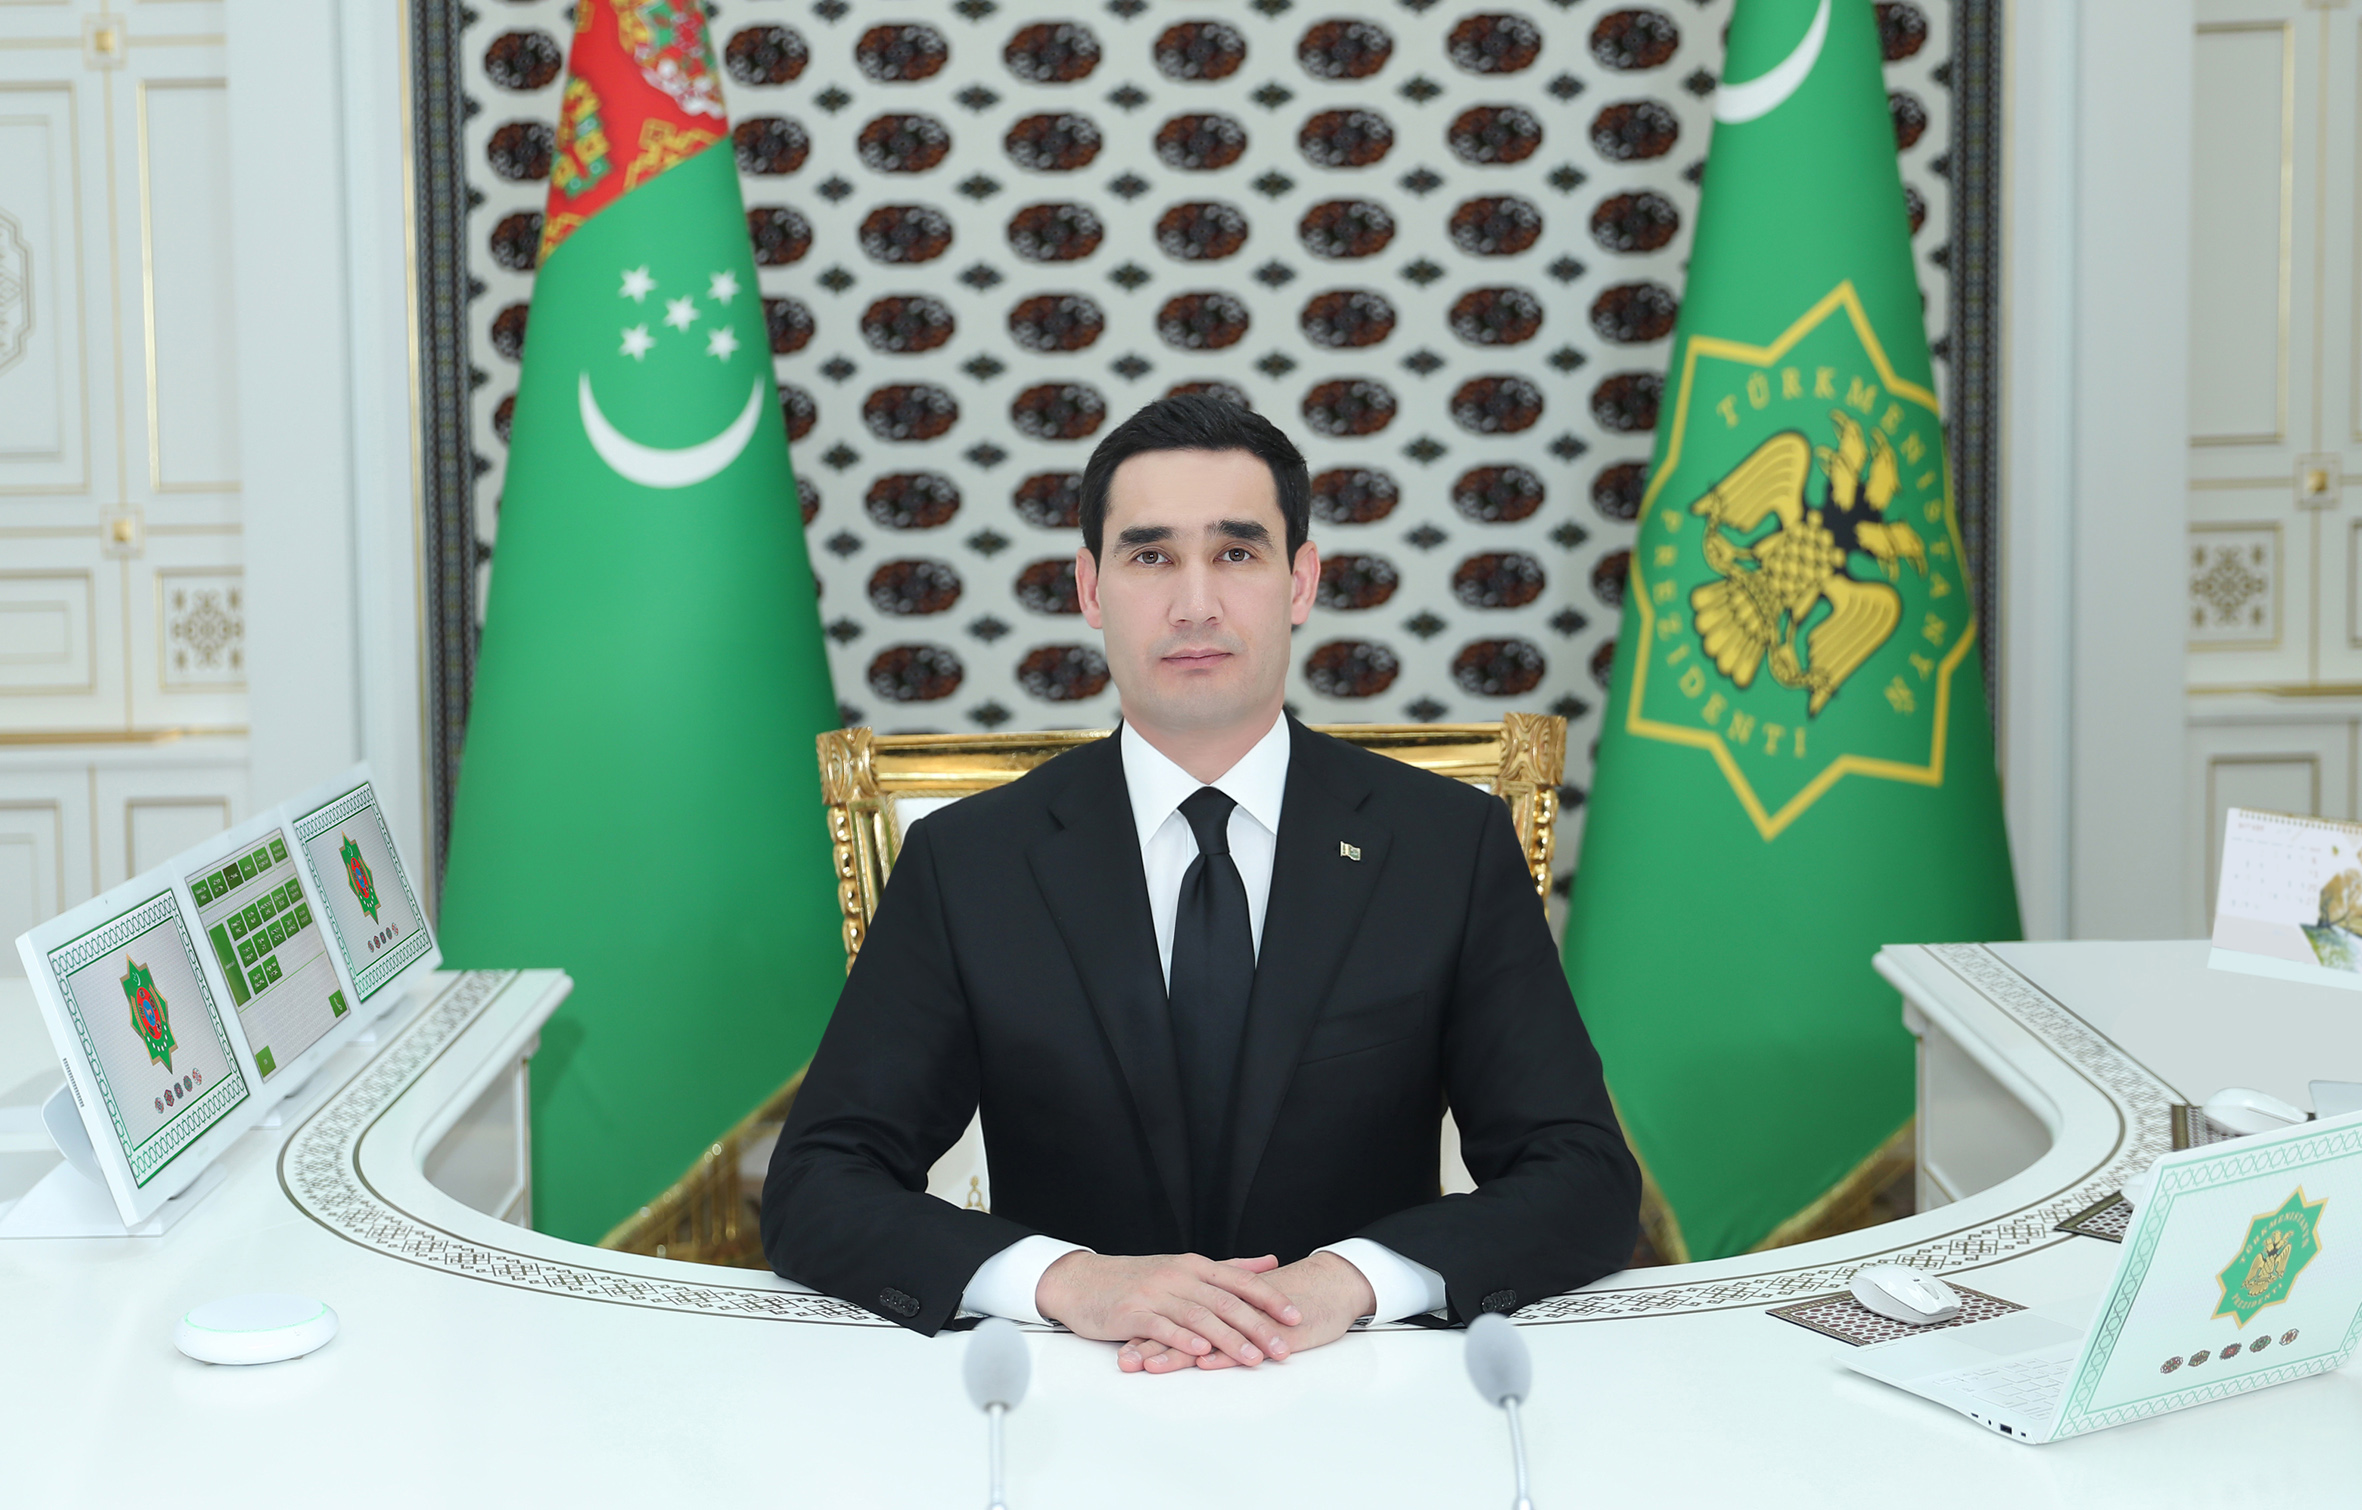 President of Turkmenistan held a working meeting via digital system